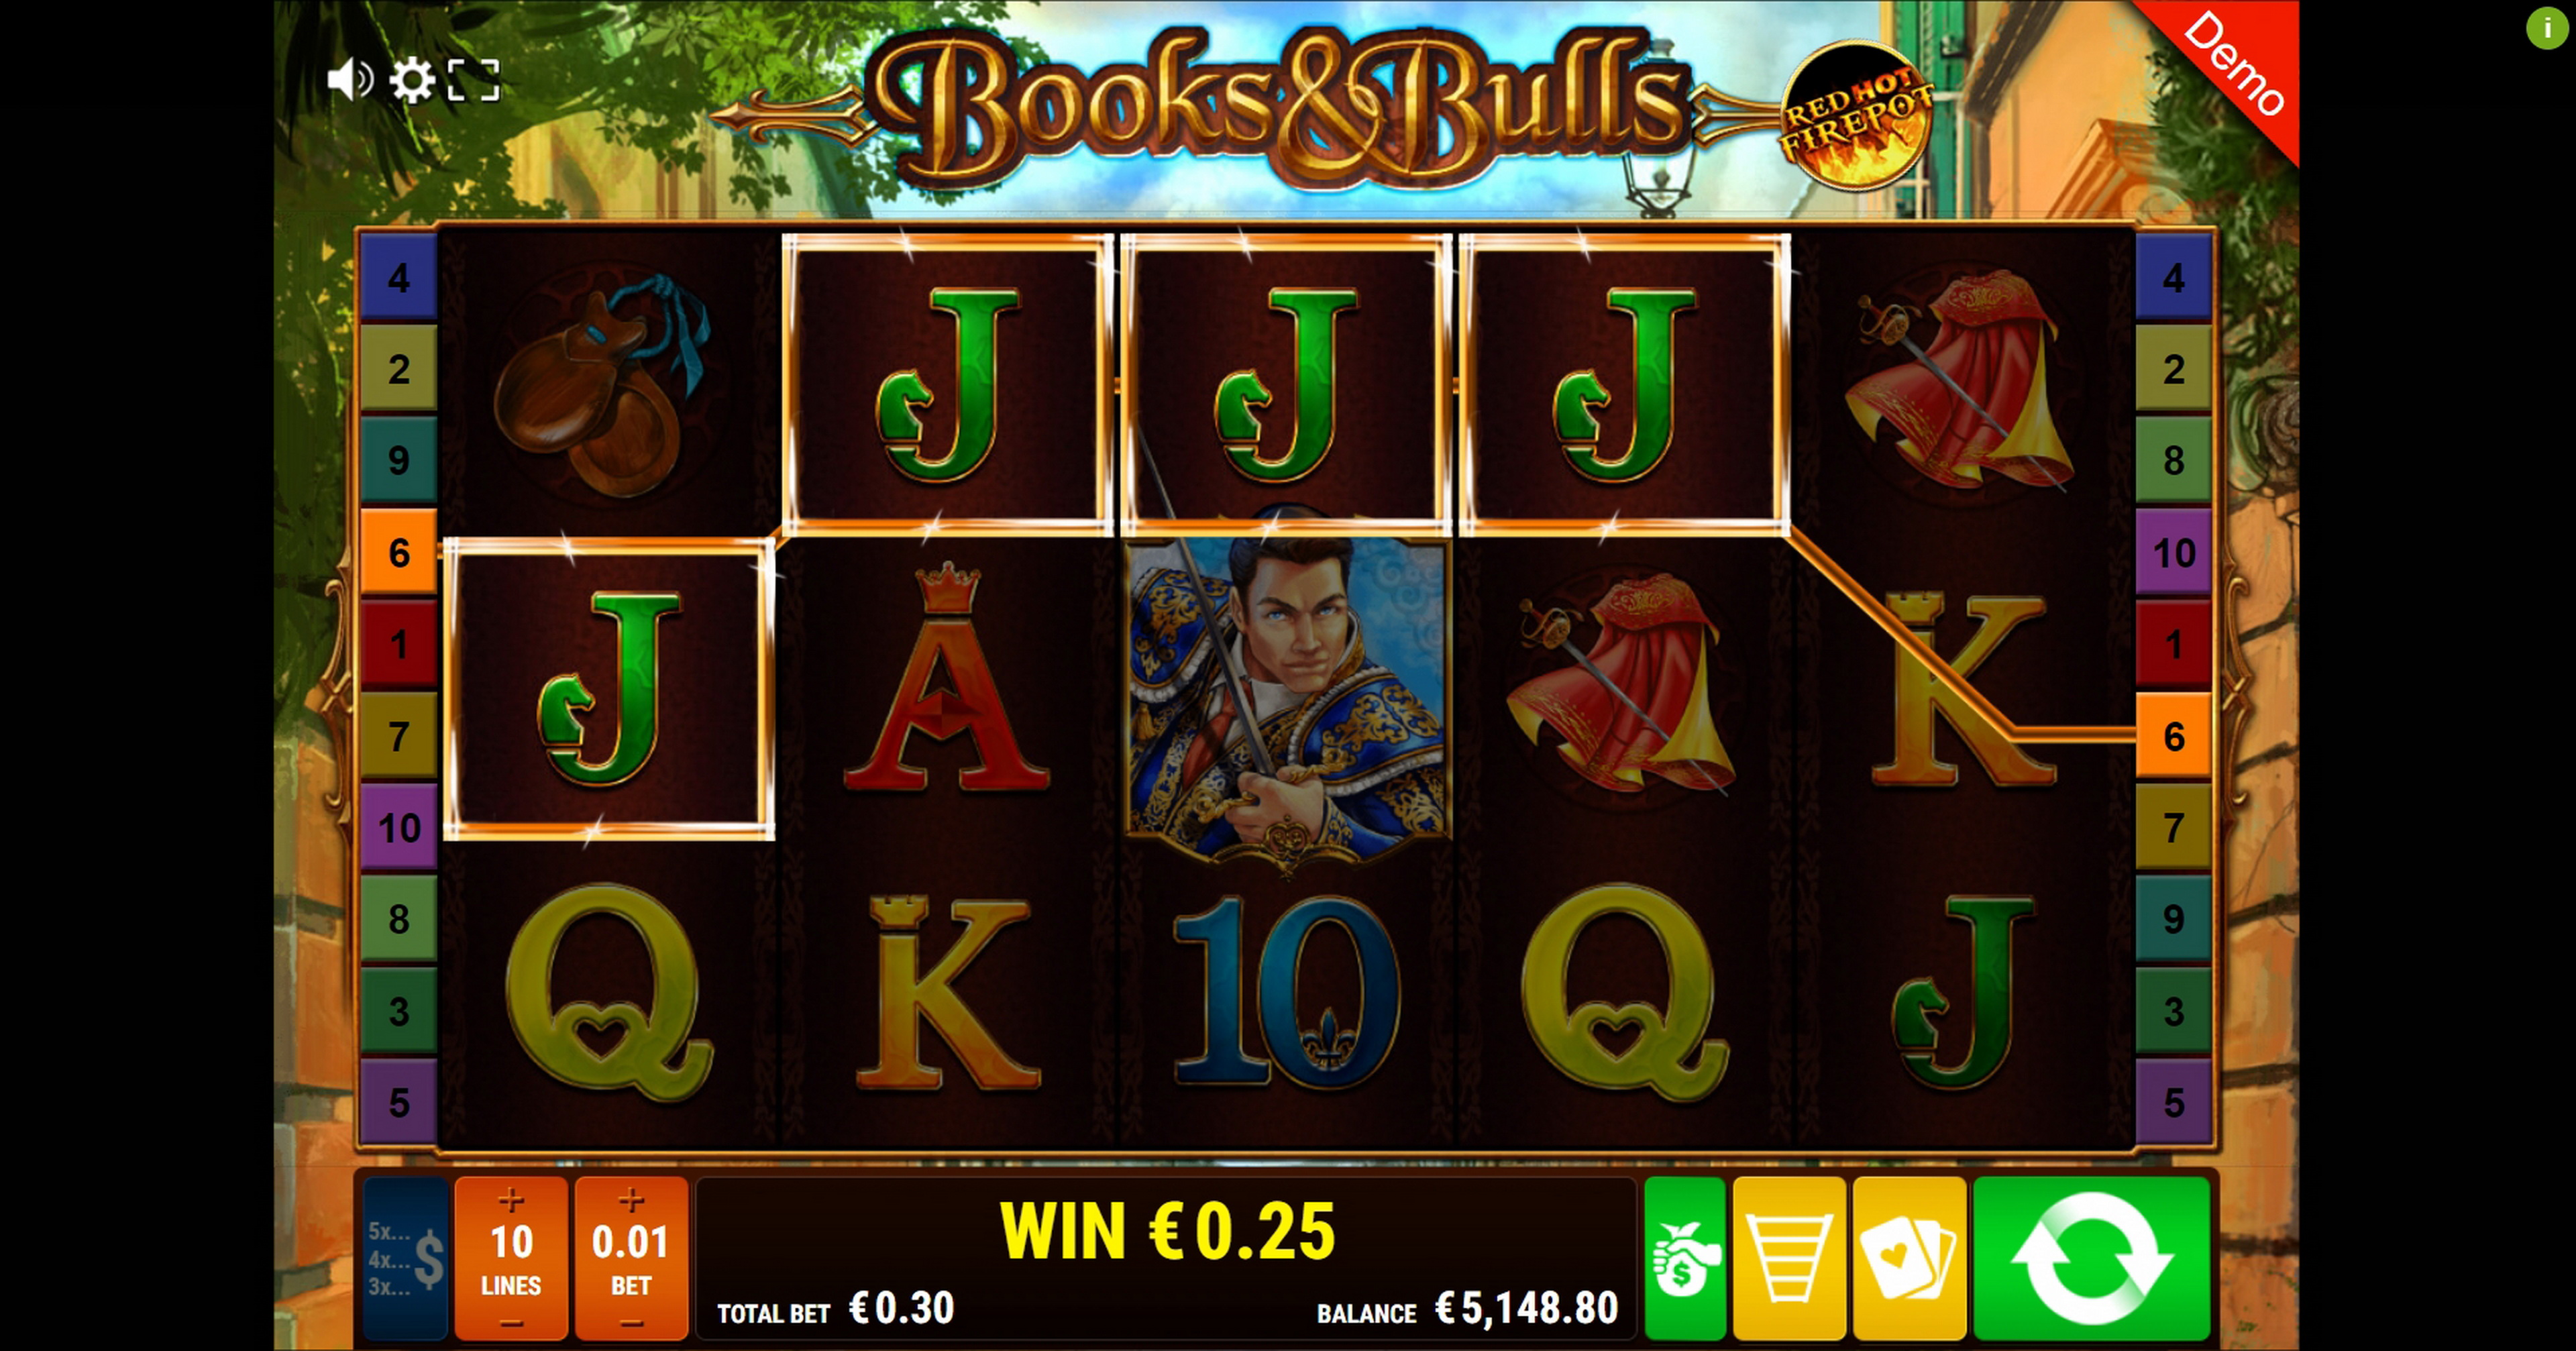 Win Money in Books & Bulls RHFP Free Slot Game by Gamomat